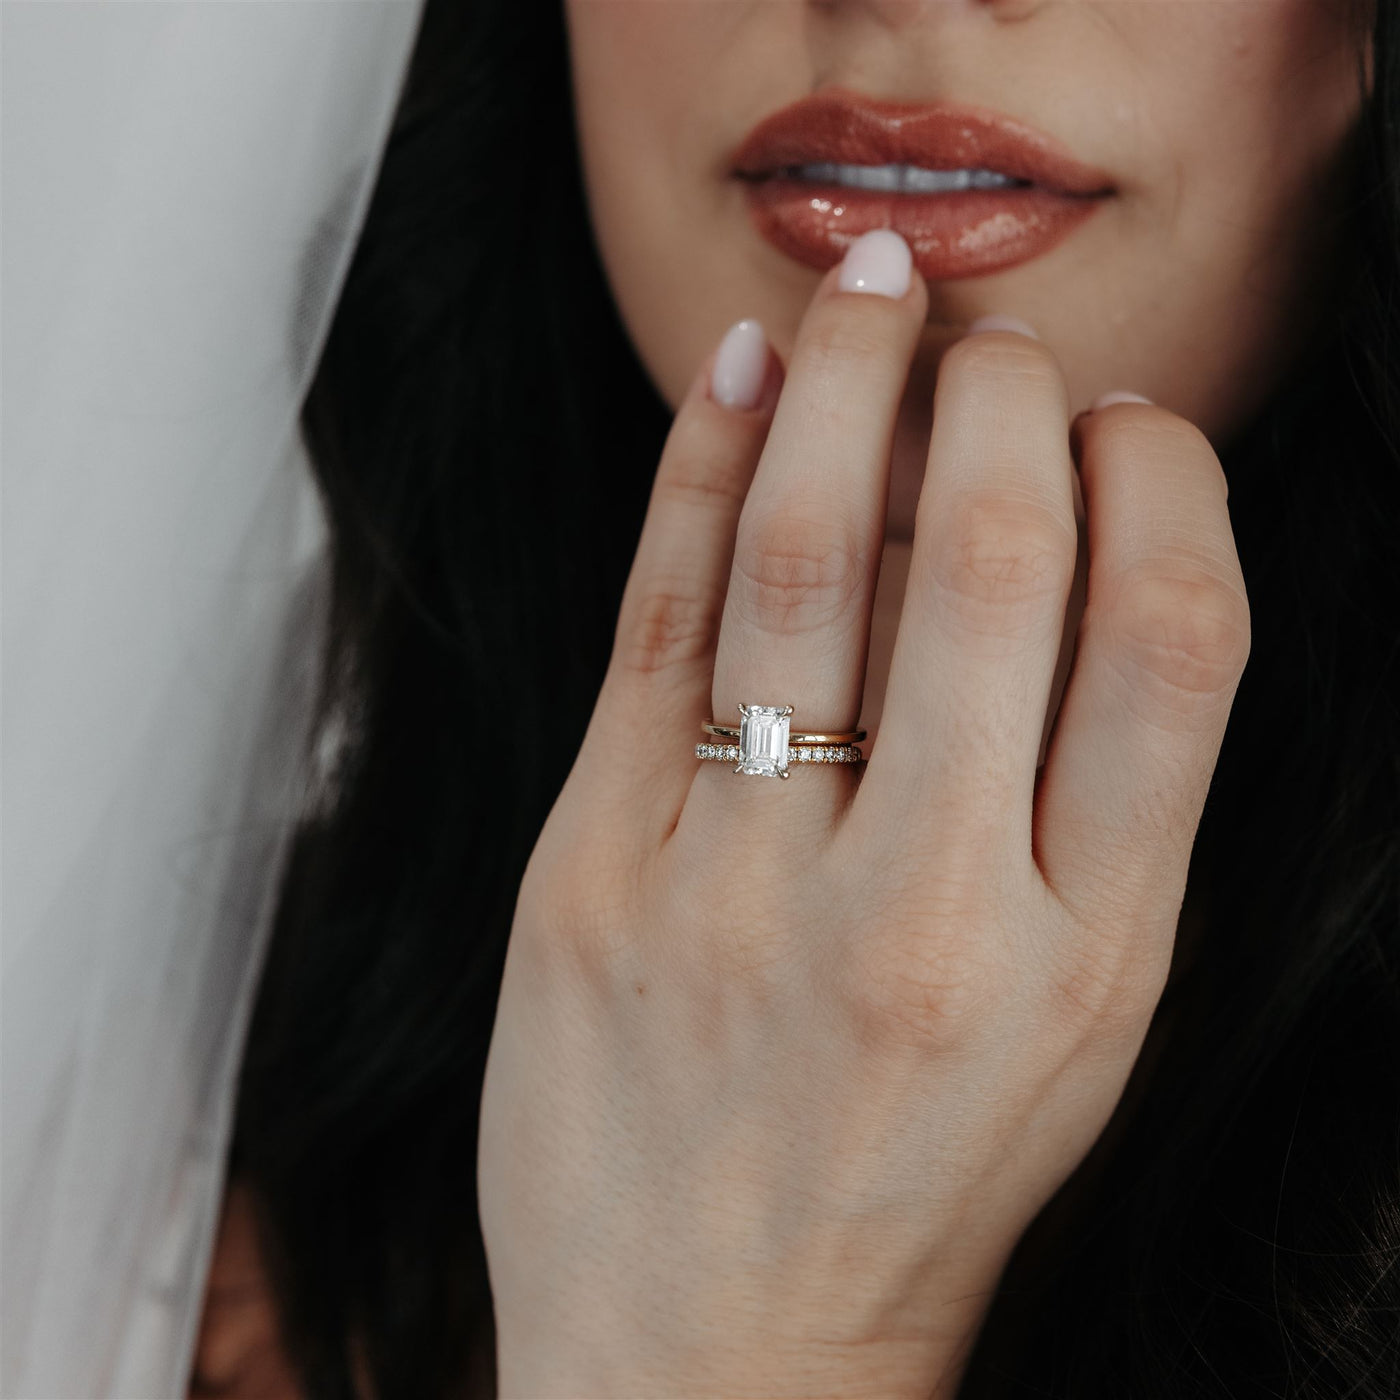 1.5 carat emerald cut diamond engagement ring